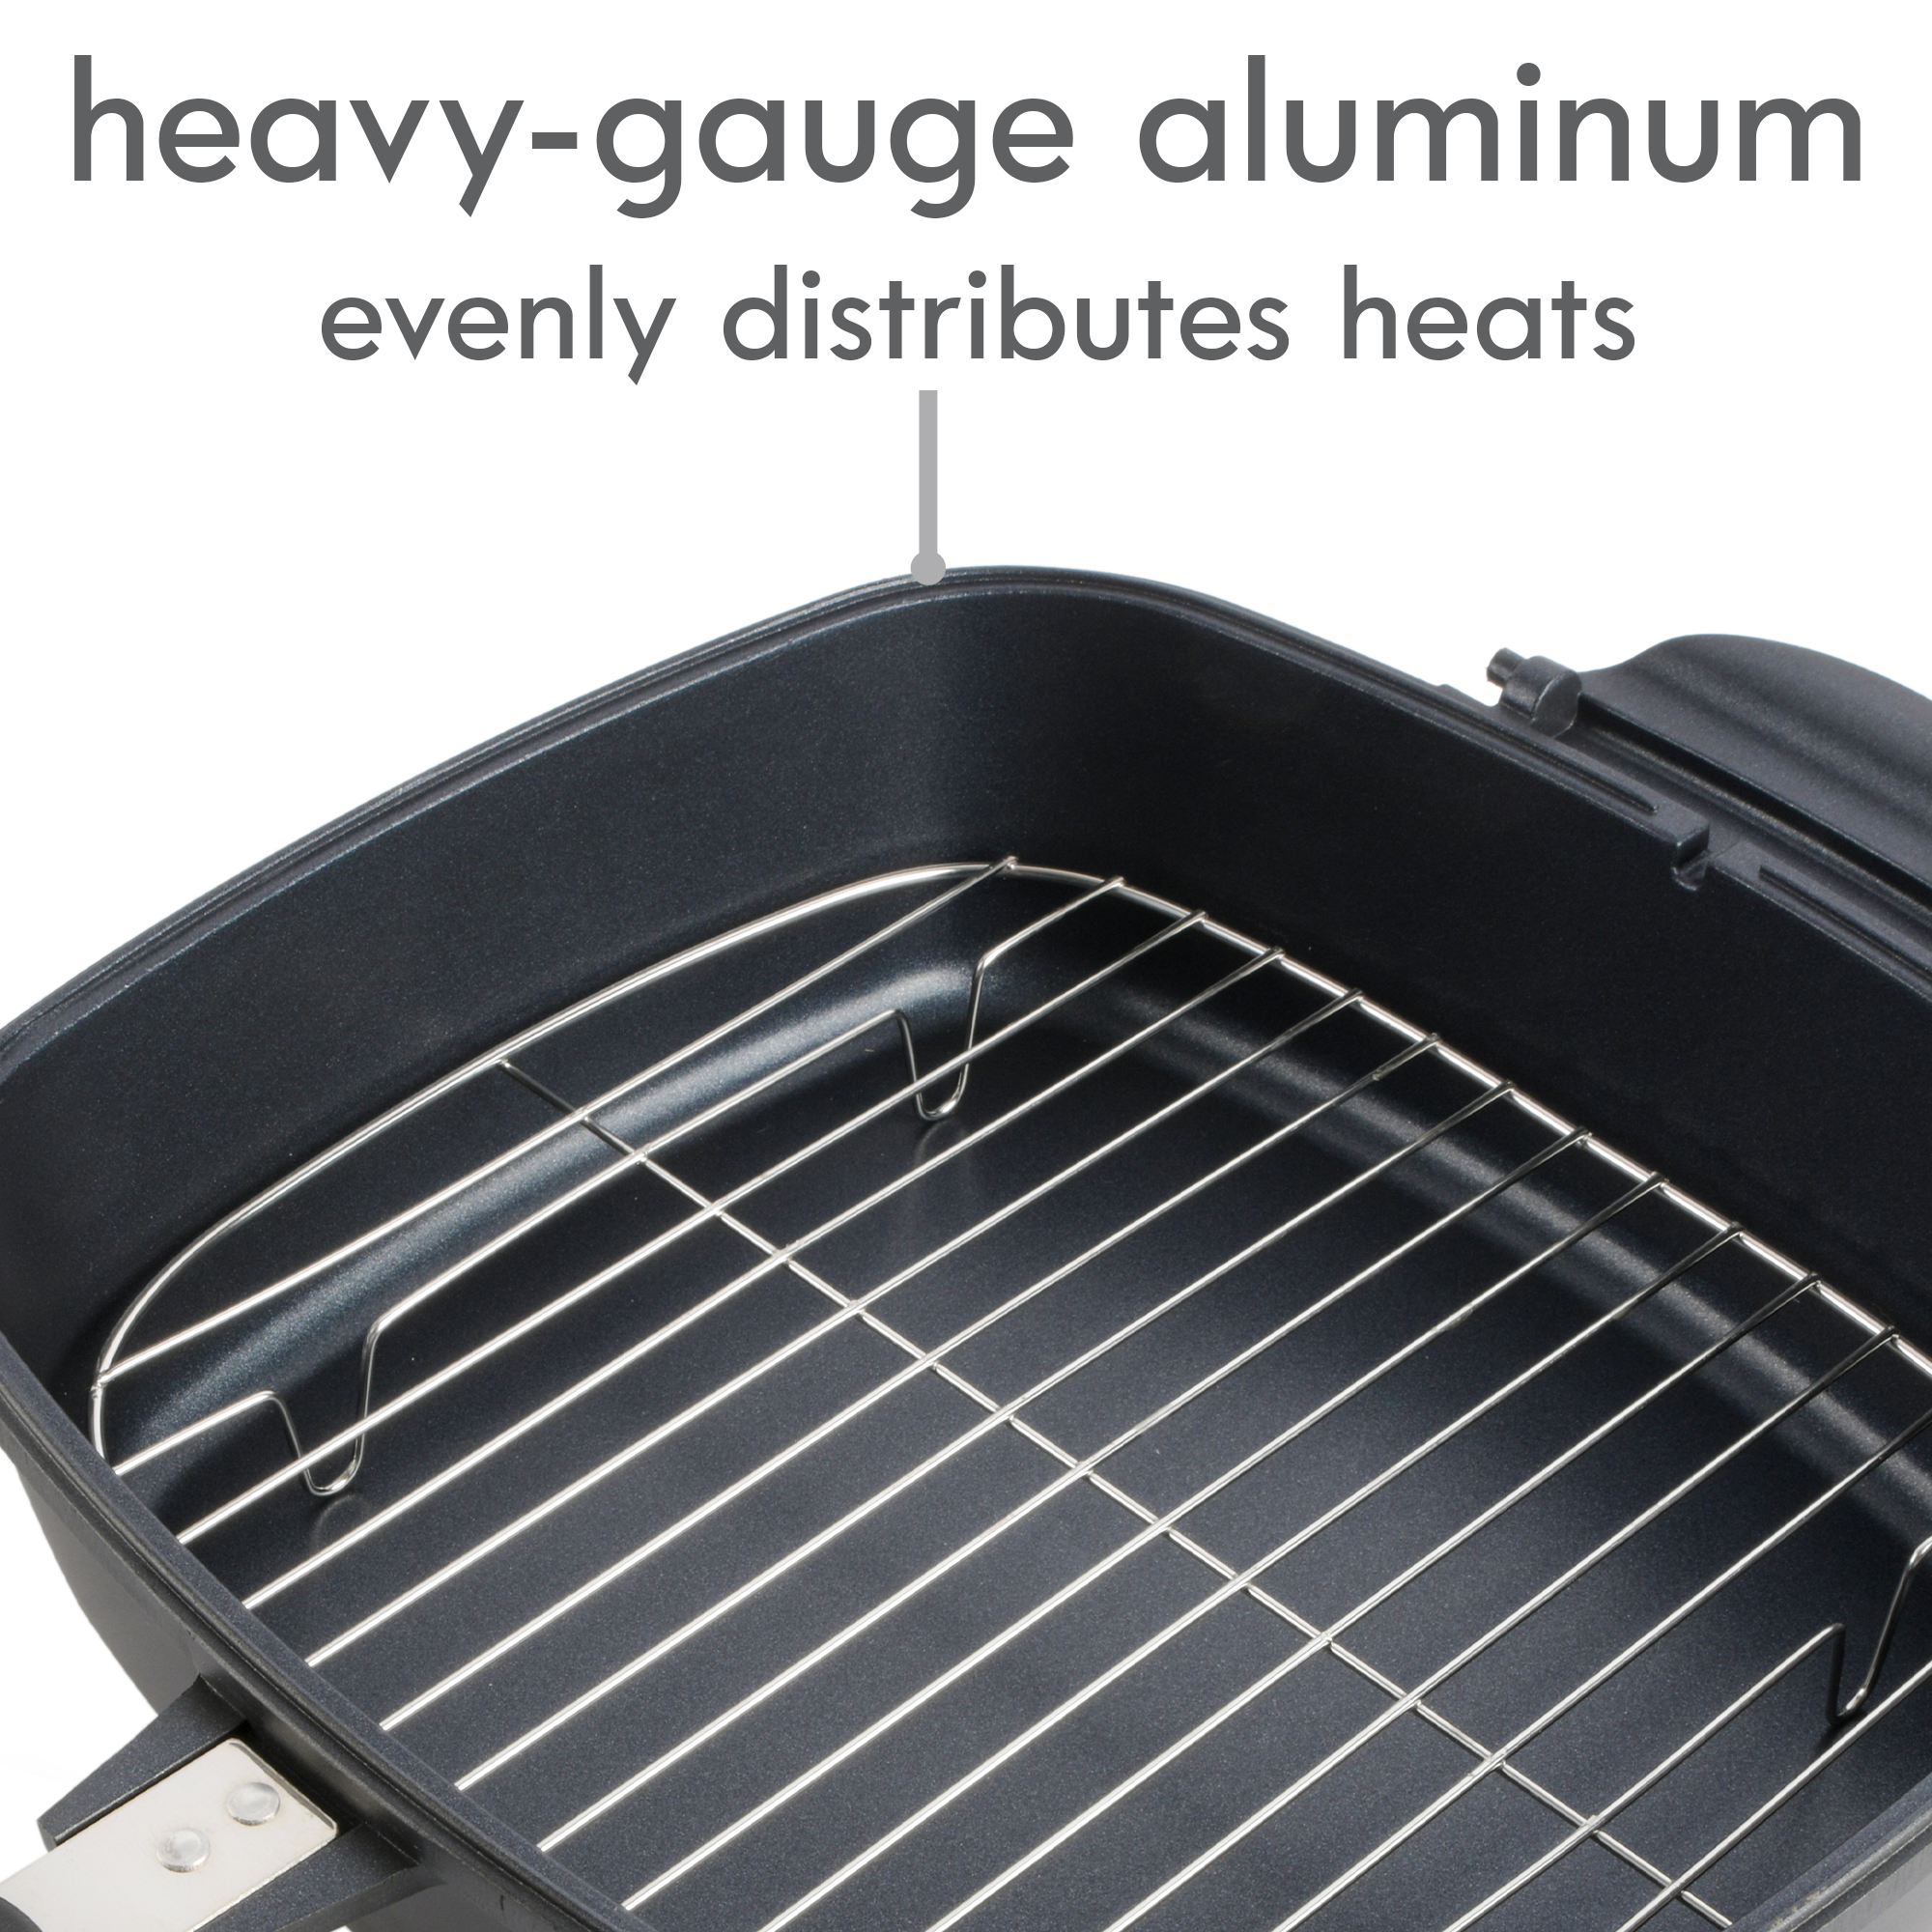 Kenmore Wyatt Aluminum Stackable Multi-function Nonstick Cookware Set, 5-piece, Handle with Magnet, Black